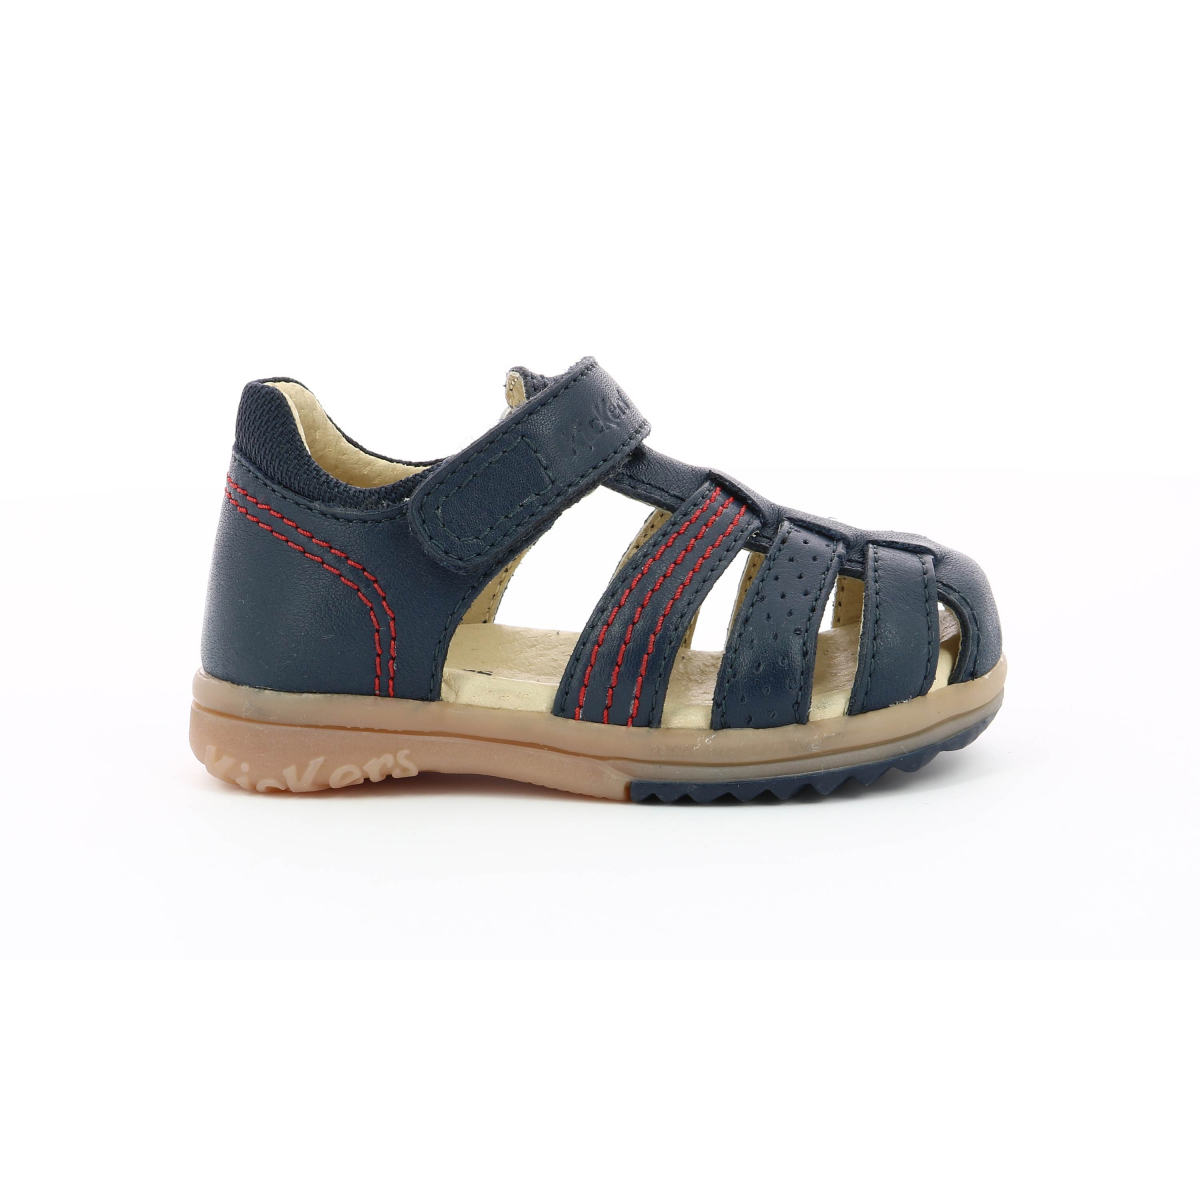 Platiback navy sandals for boy - Kickers © Official website